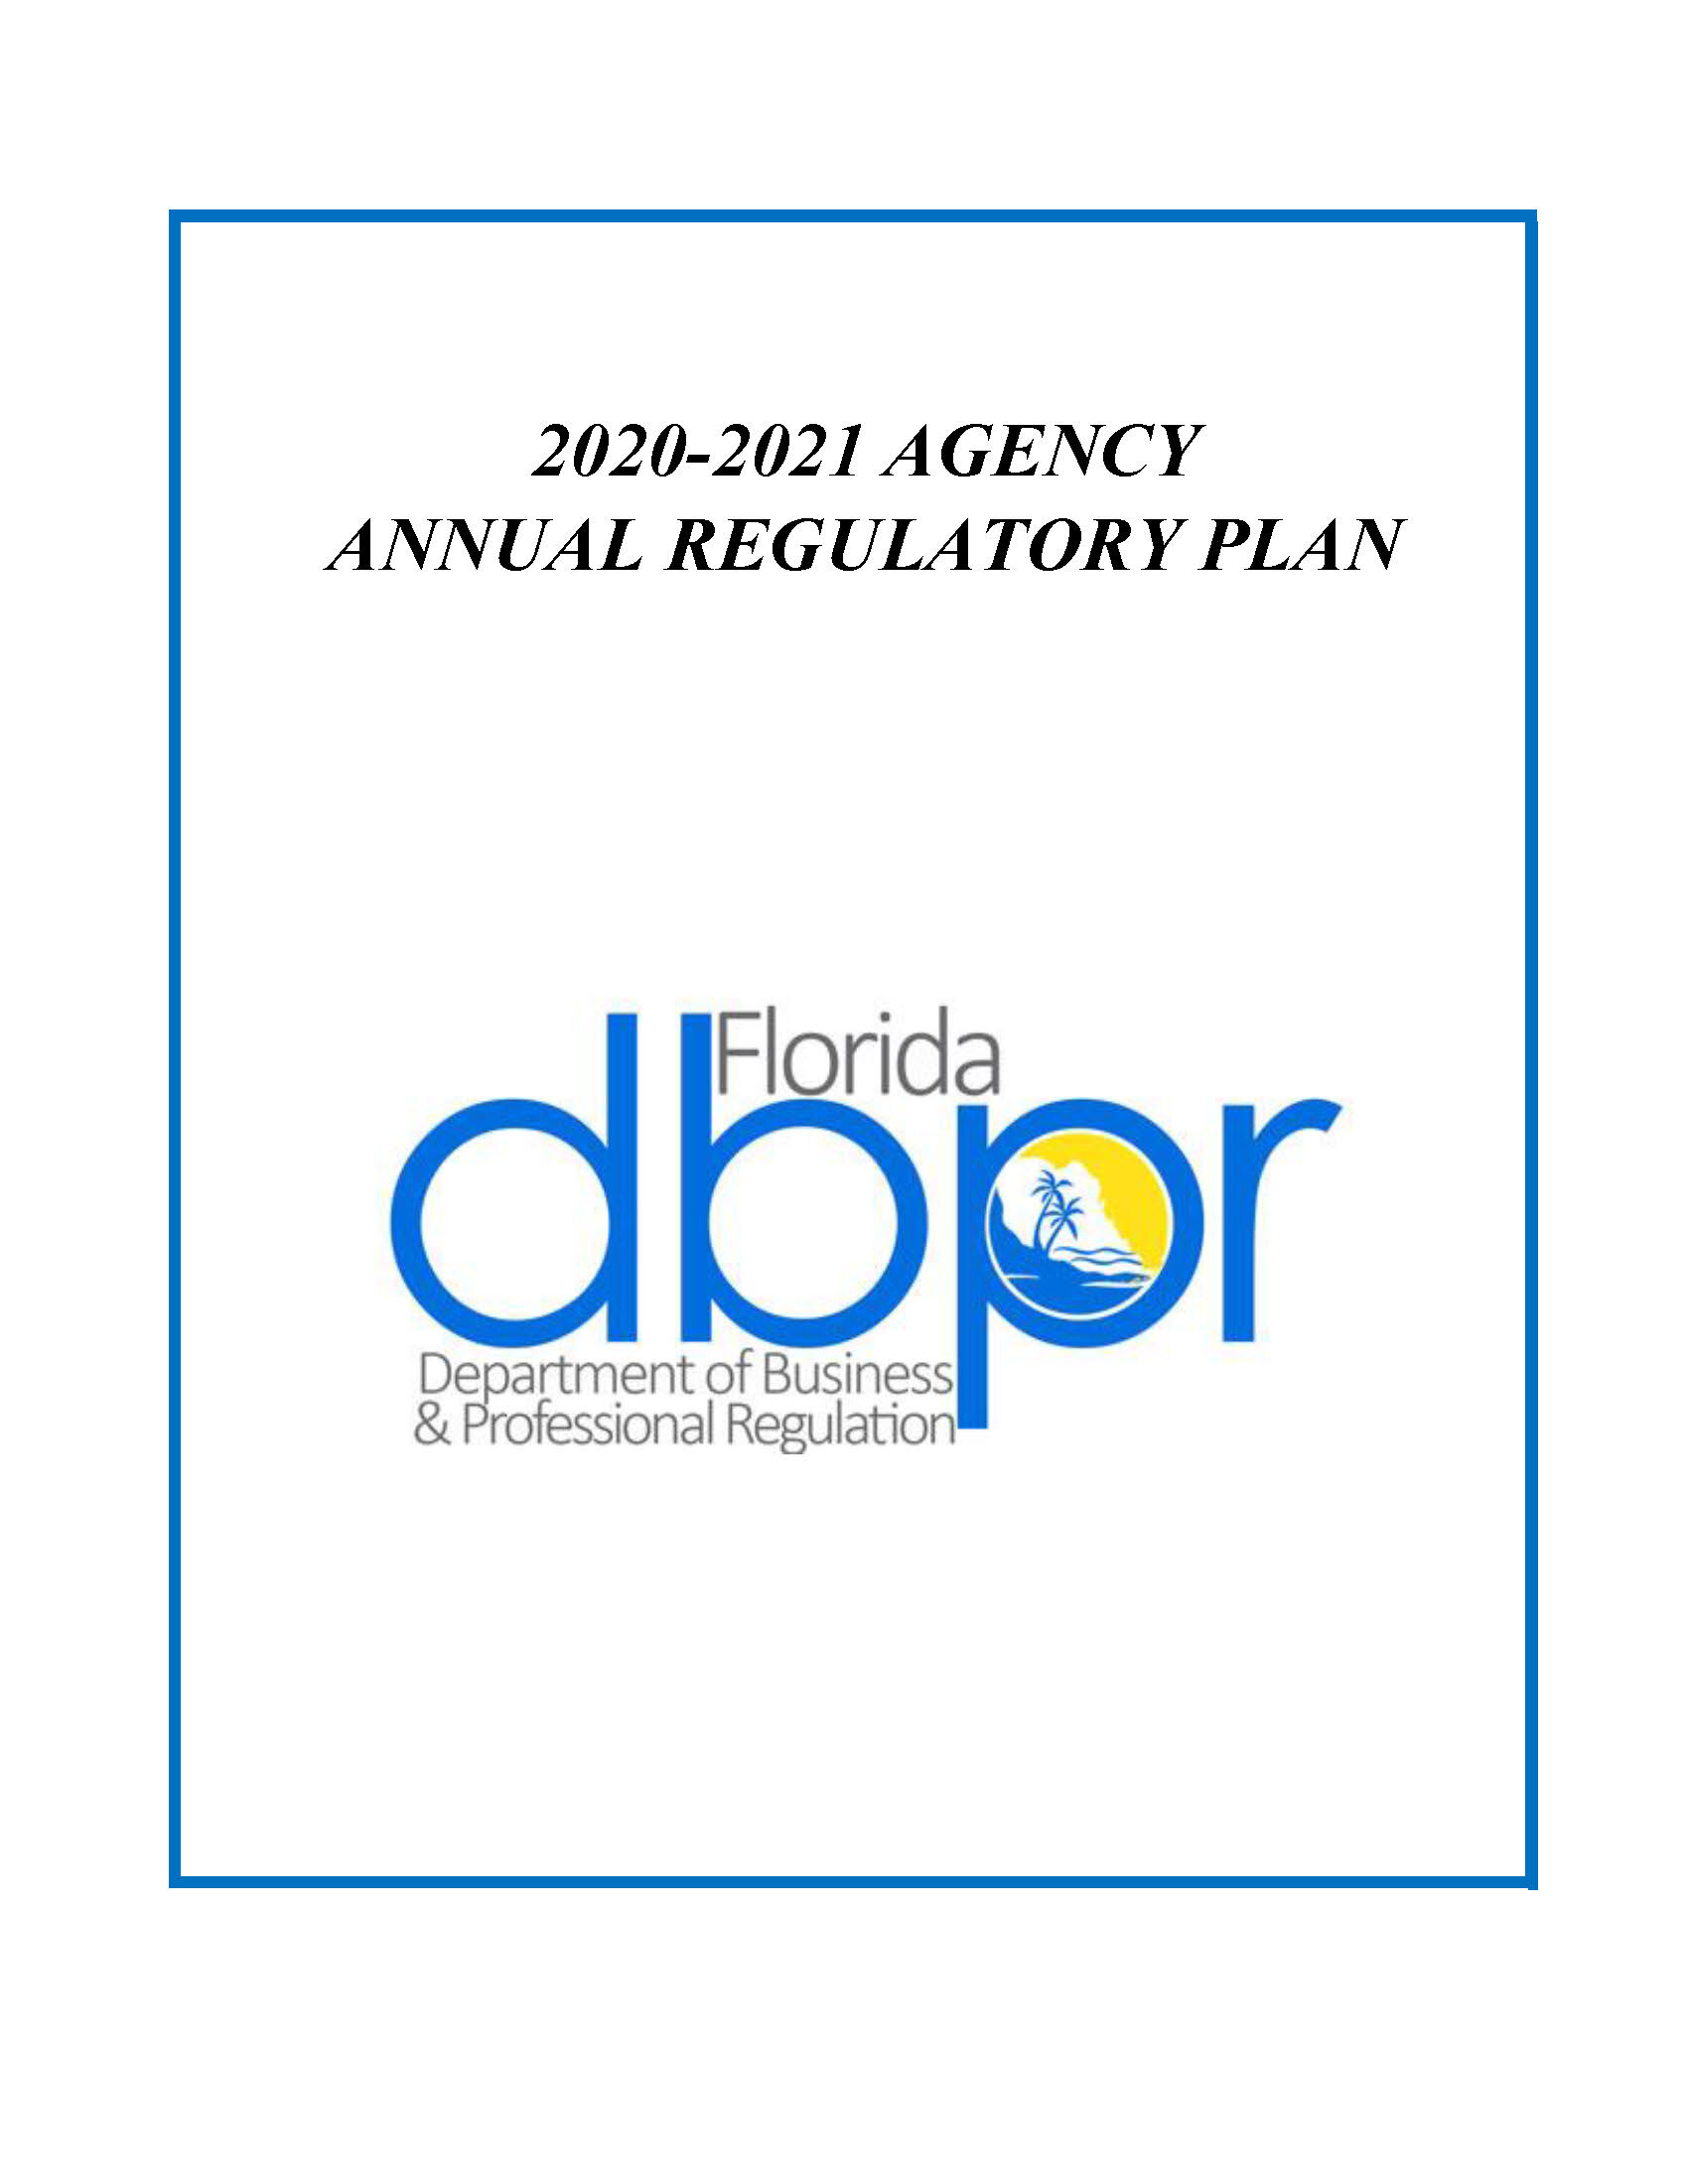 2020-2021 Agency Annual Regulatory Plan_Page_01.jpg